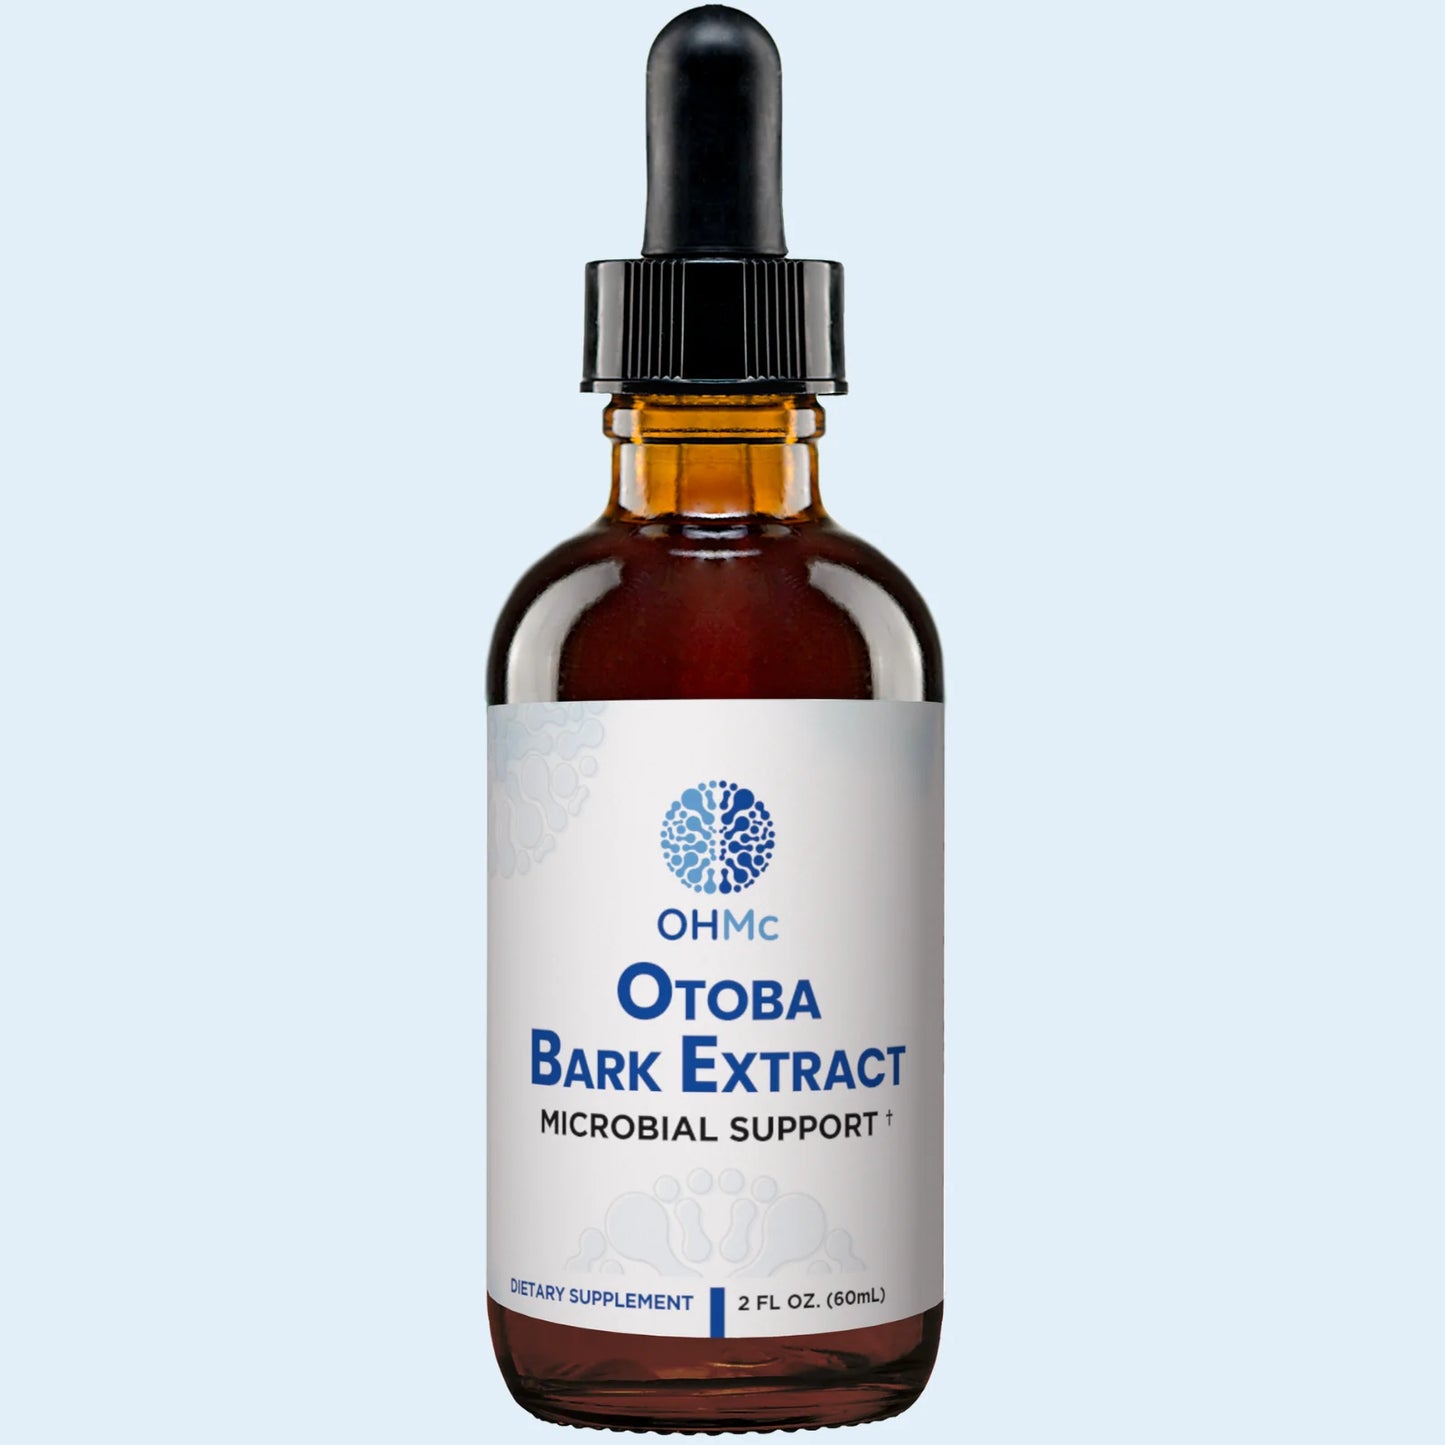 Otoba Bark Extract